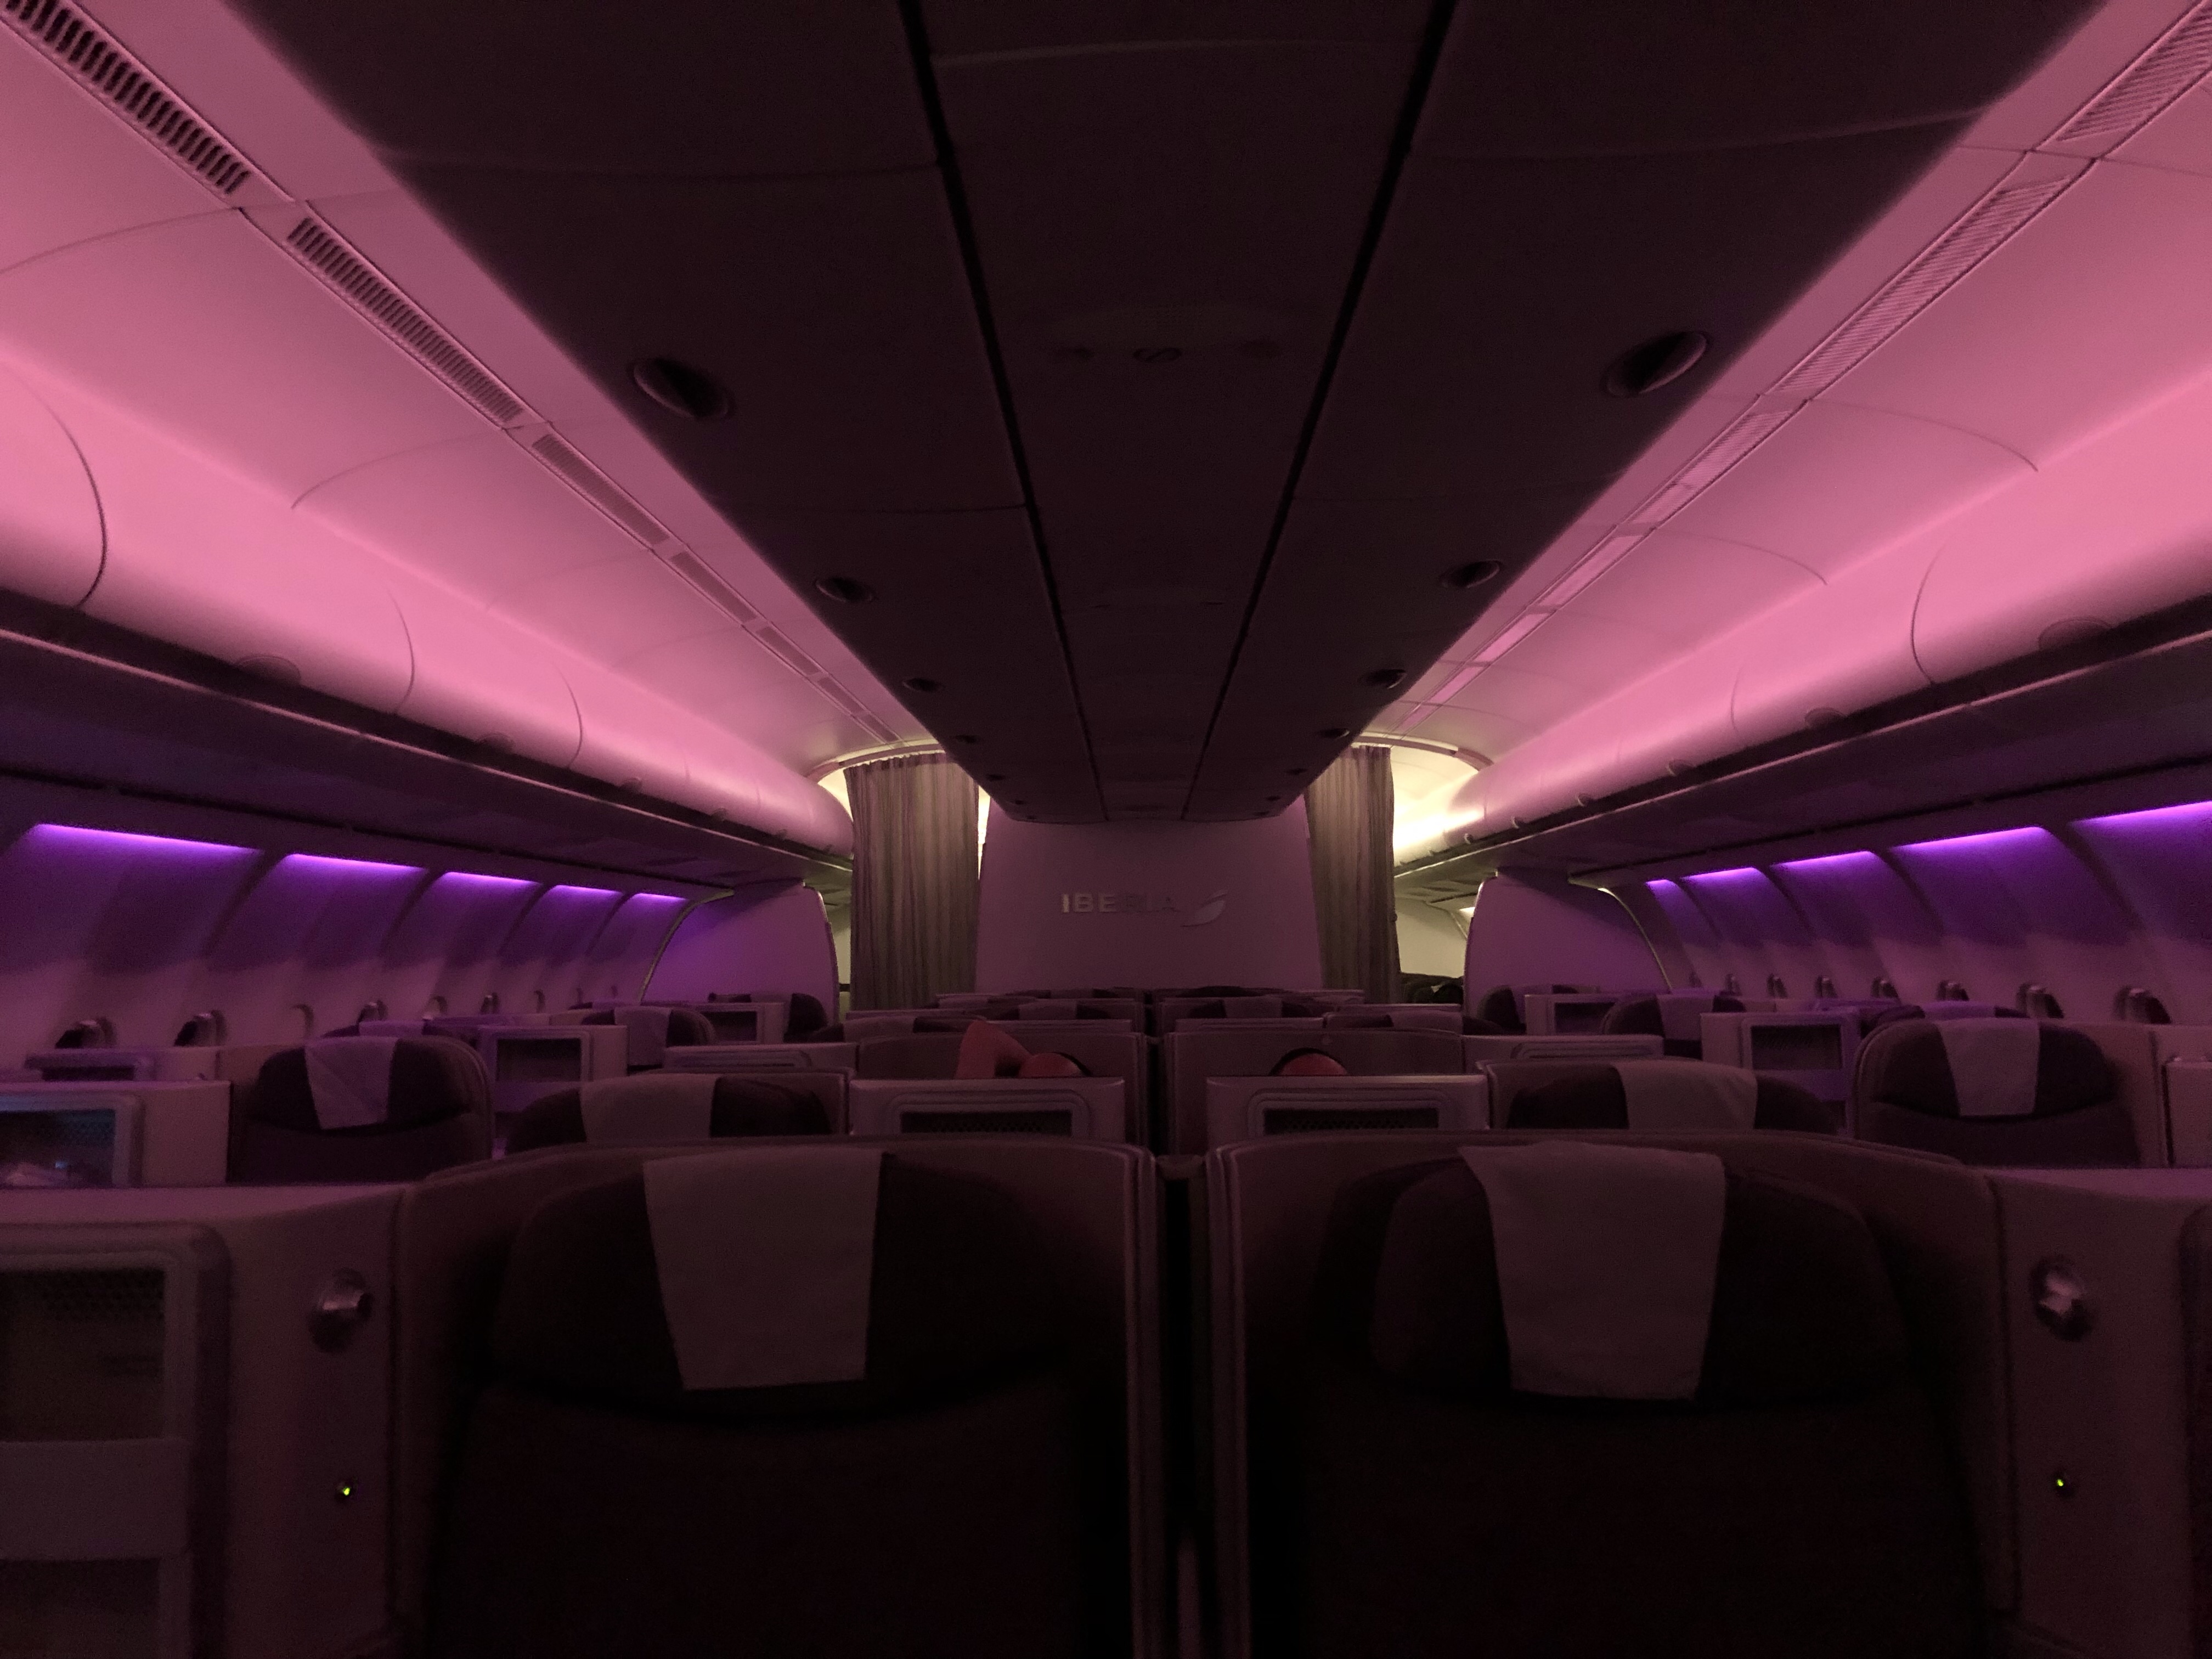 inside an airplane with purple lights